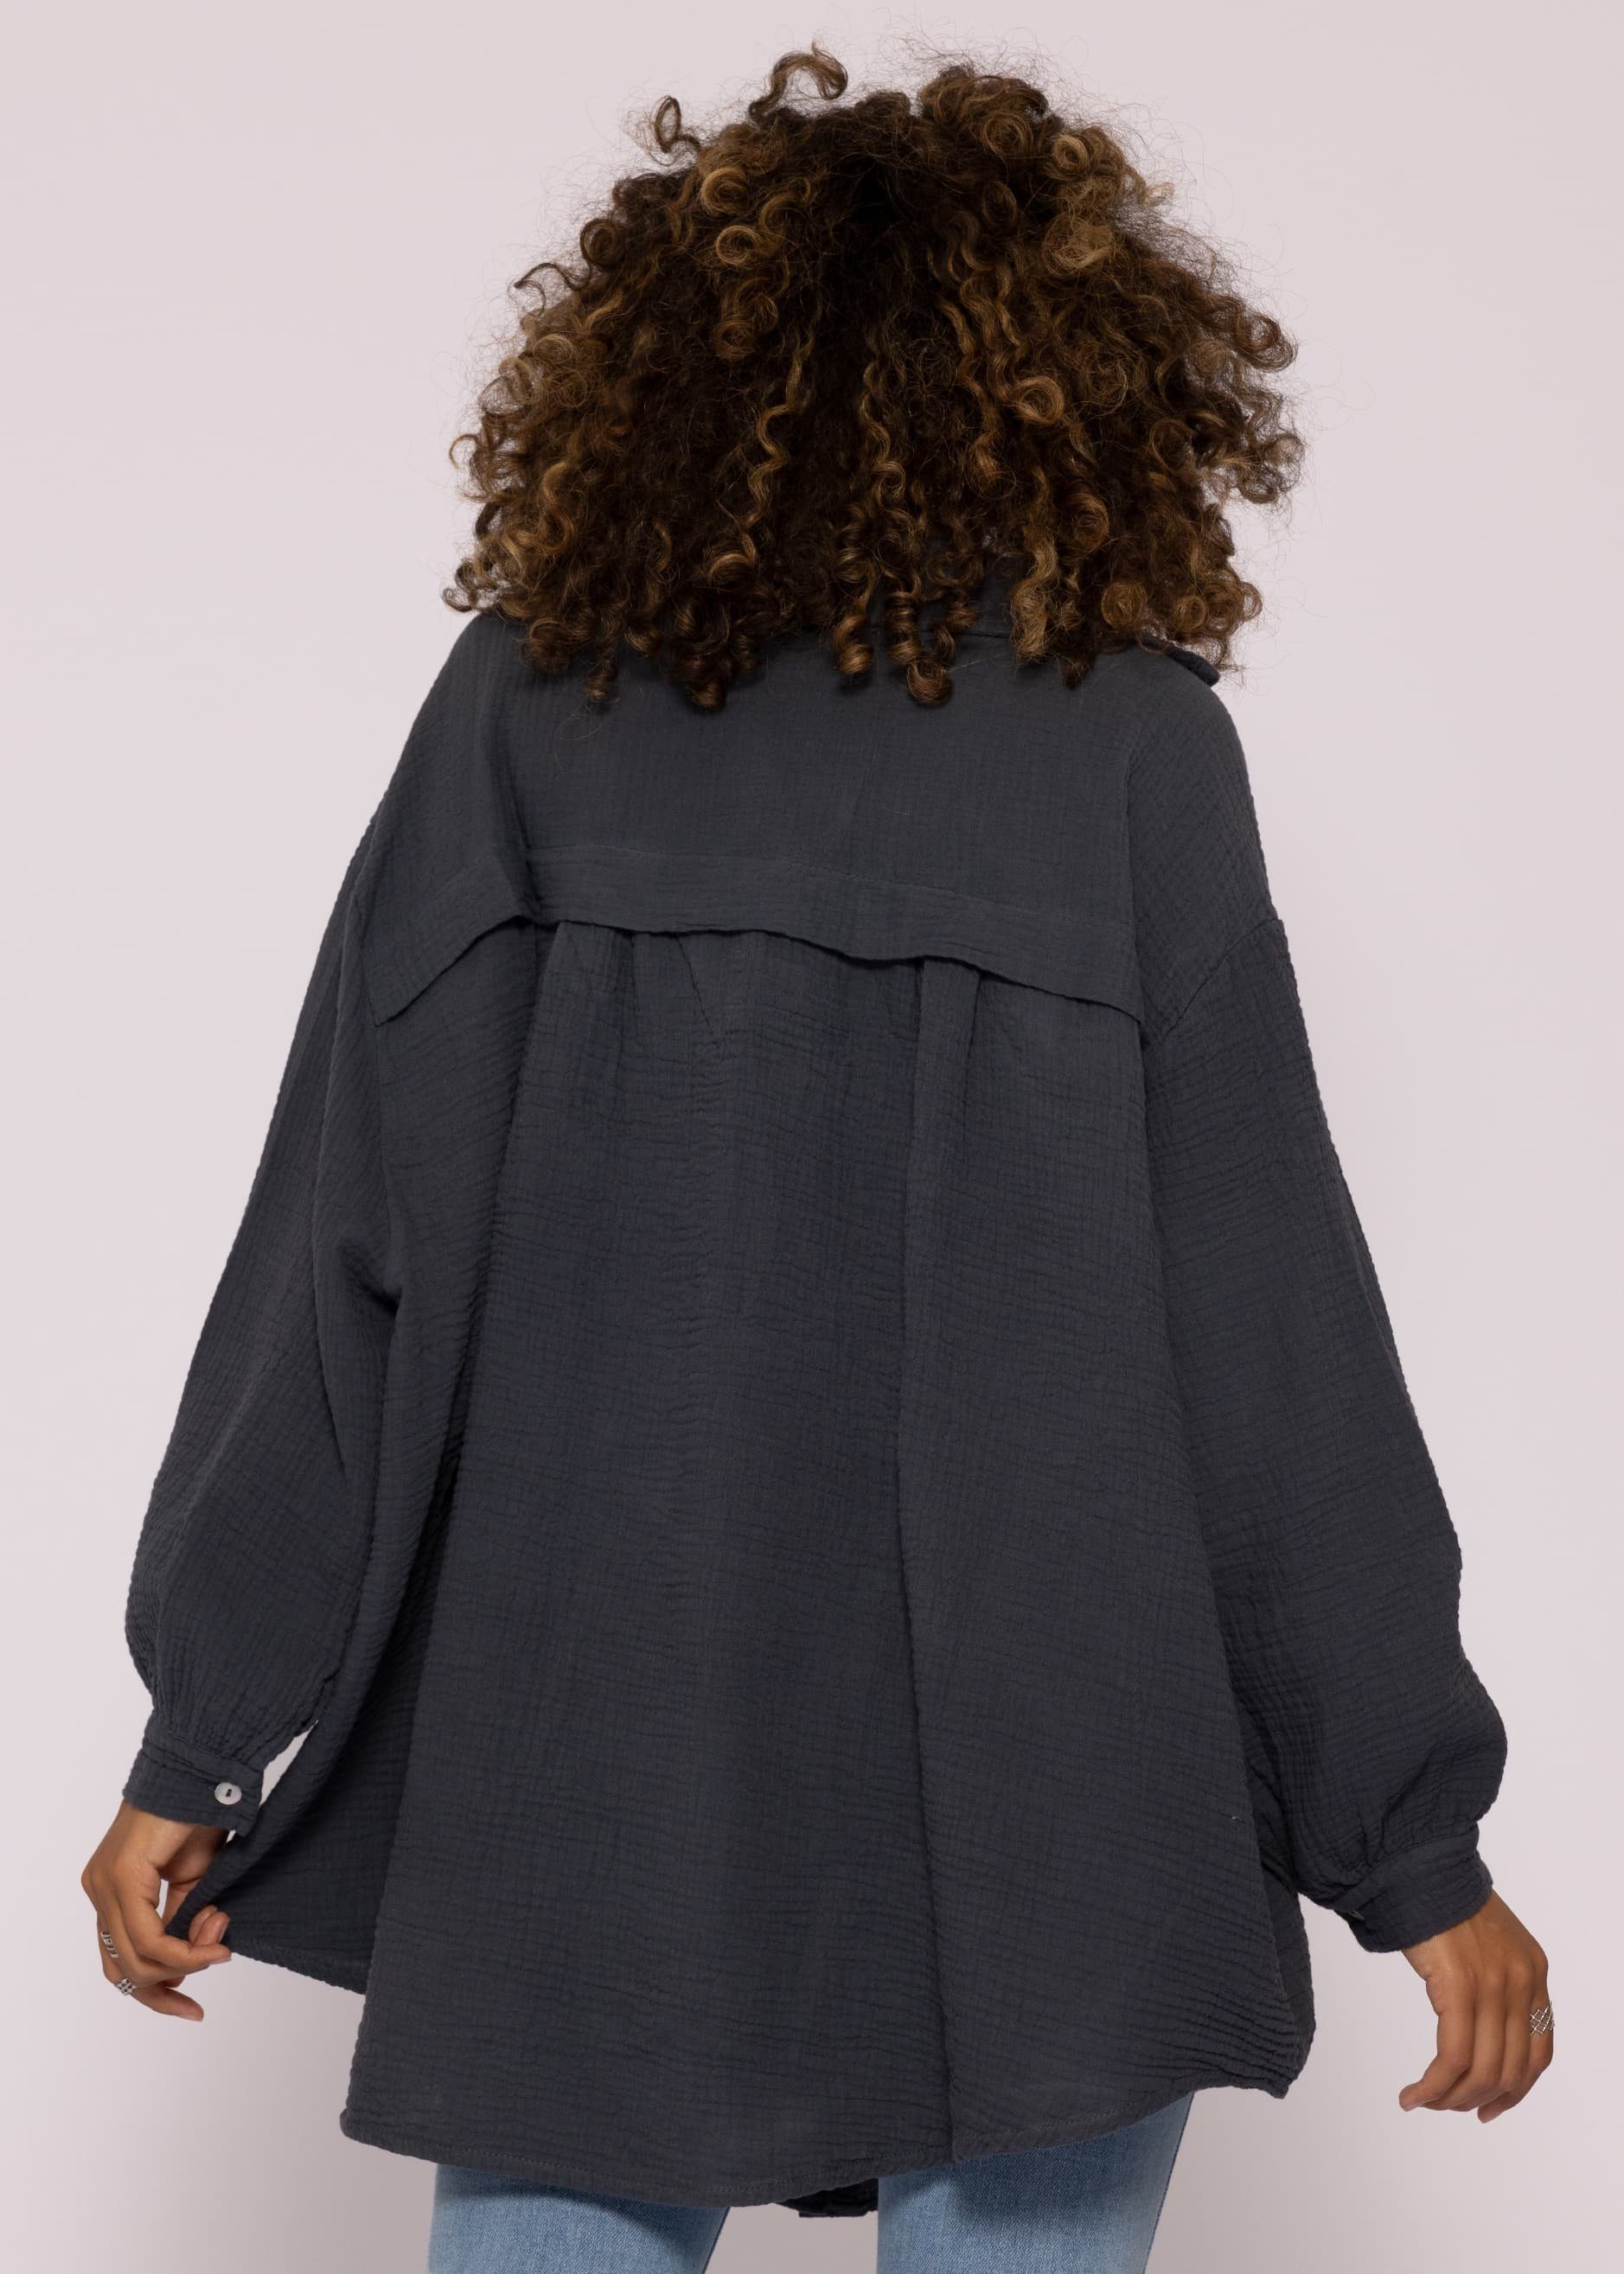 Bluse One Longbluse Baumwolle mit (Gr. 36-48) Dunkelgrau Damen V-Ausschnitt, Langarm lang Musselin Oversize Size aus SASSYCLASSY Hemdbluse